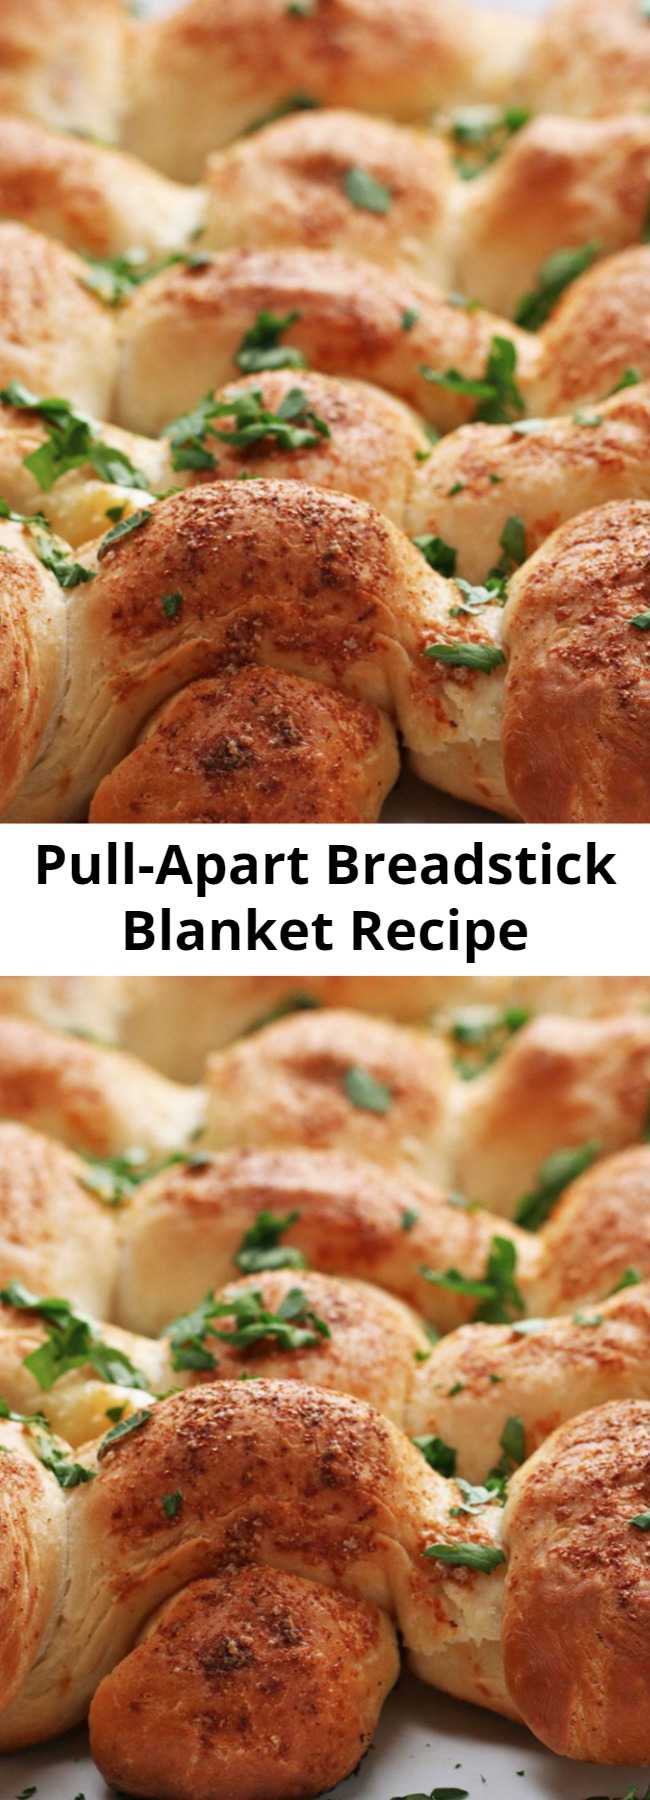 Pull-Apart Breadstick Blanket Recipe